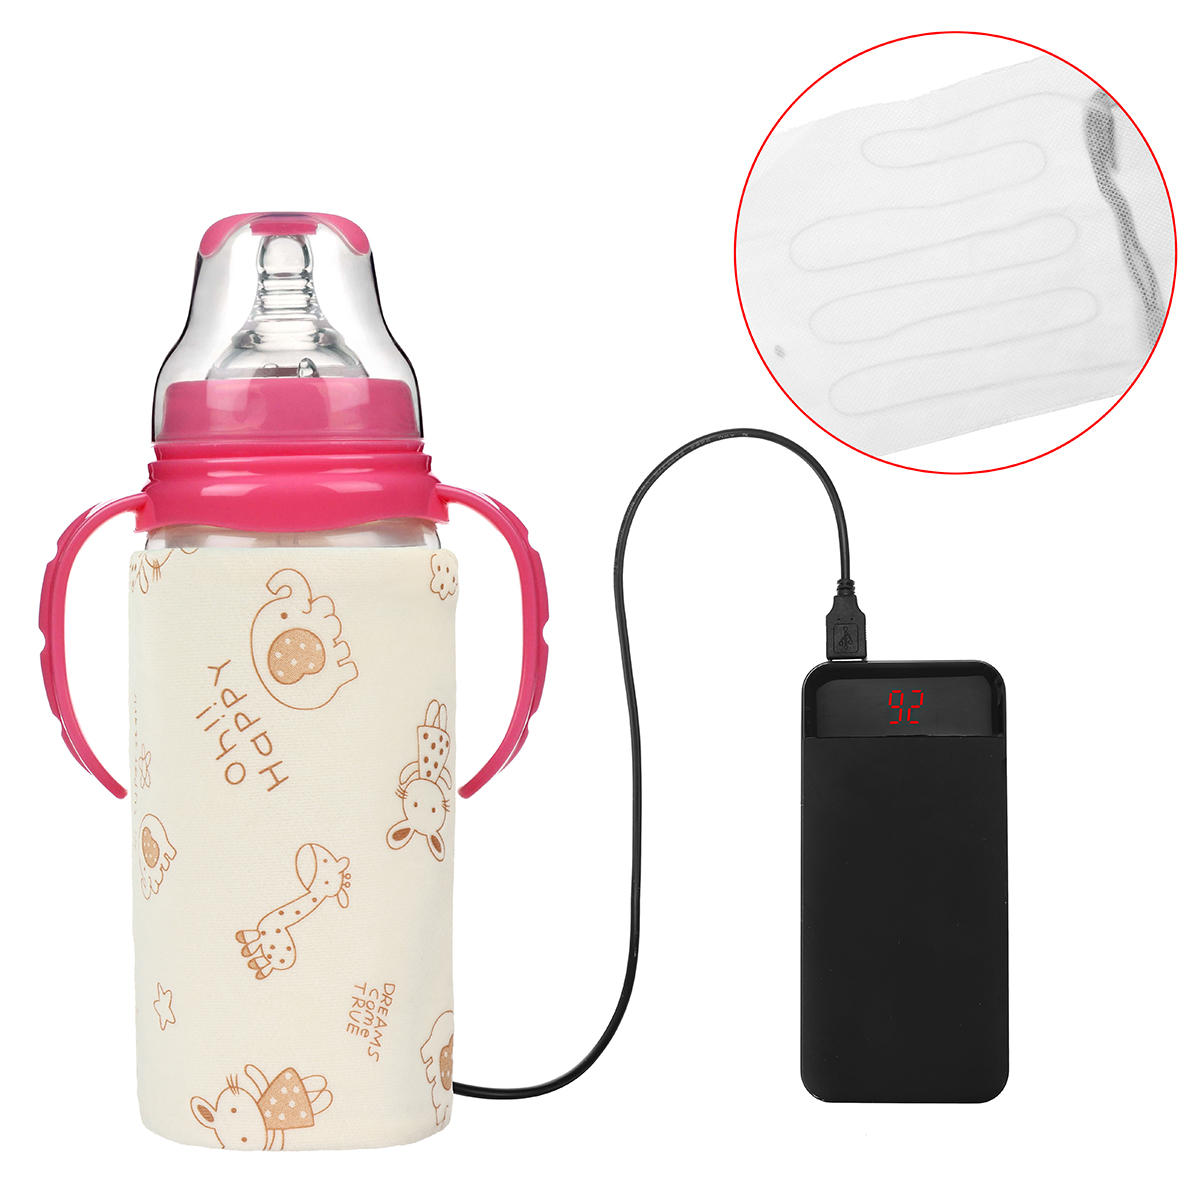 

USB Baby Feeding Milk Bottle Warmer Heating Insulation Cover Outdoor Portable